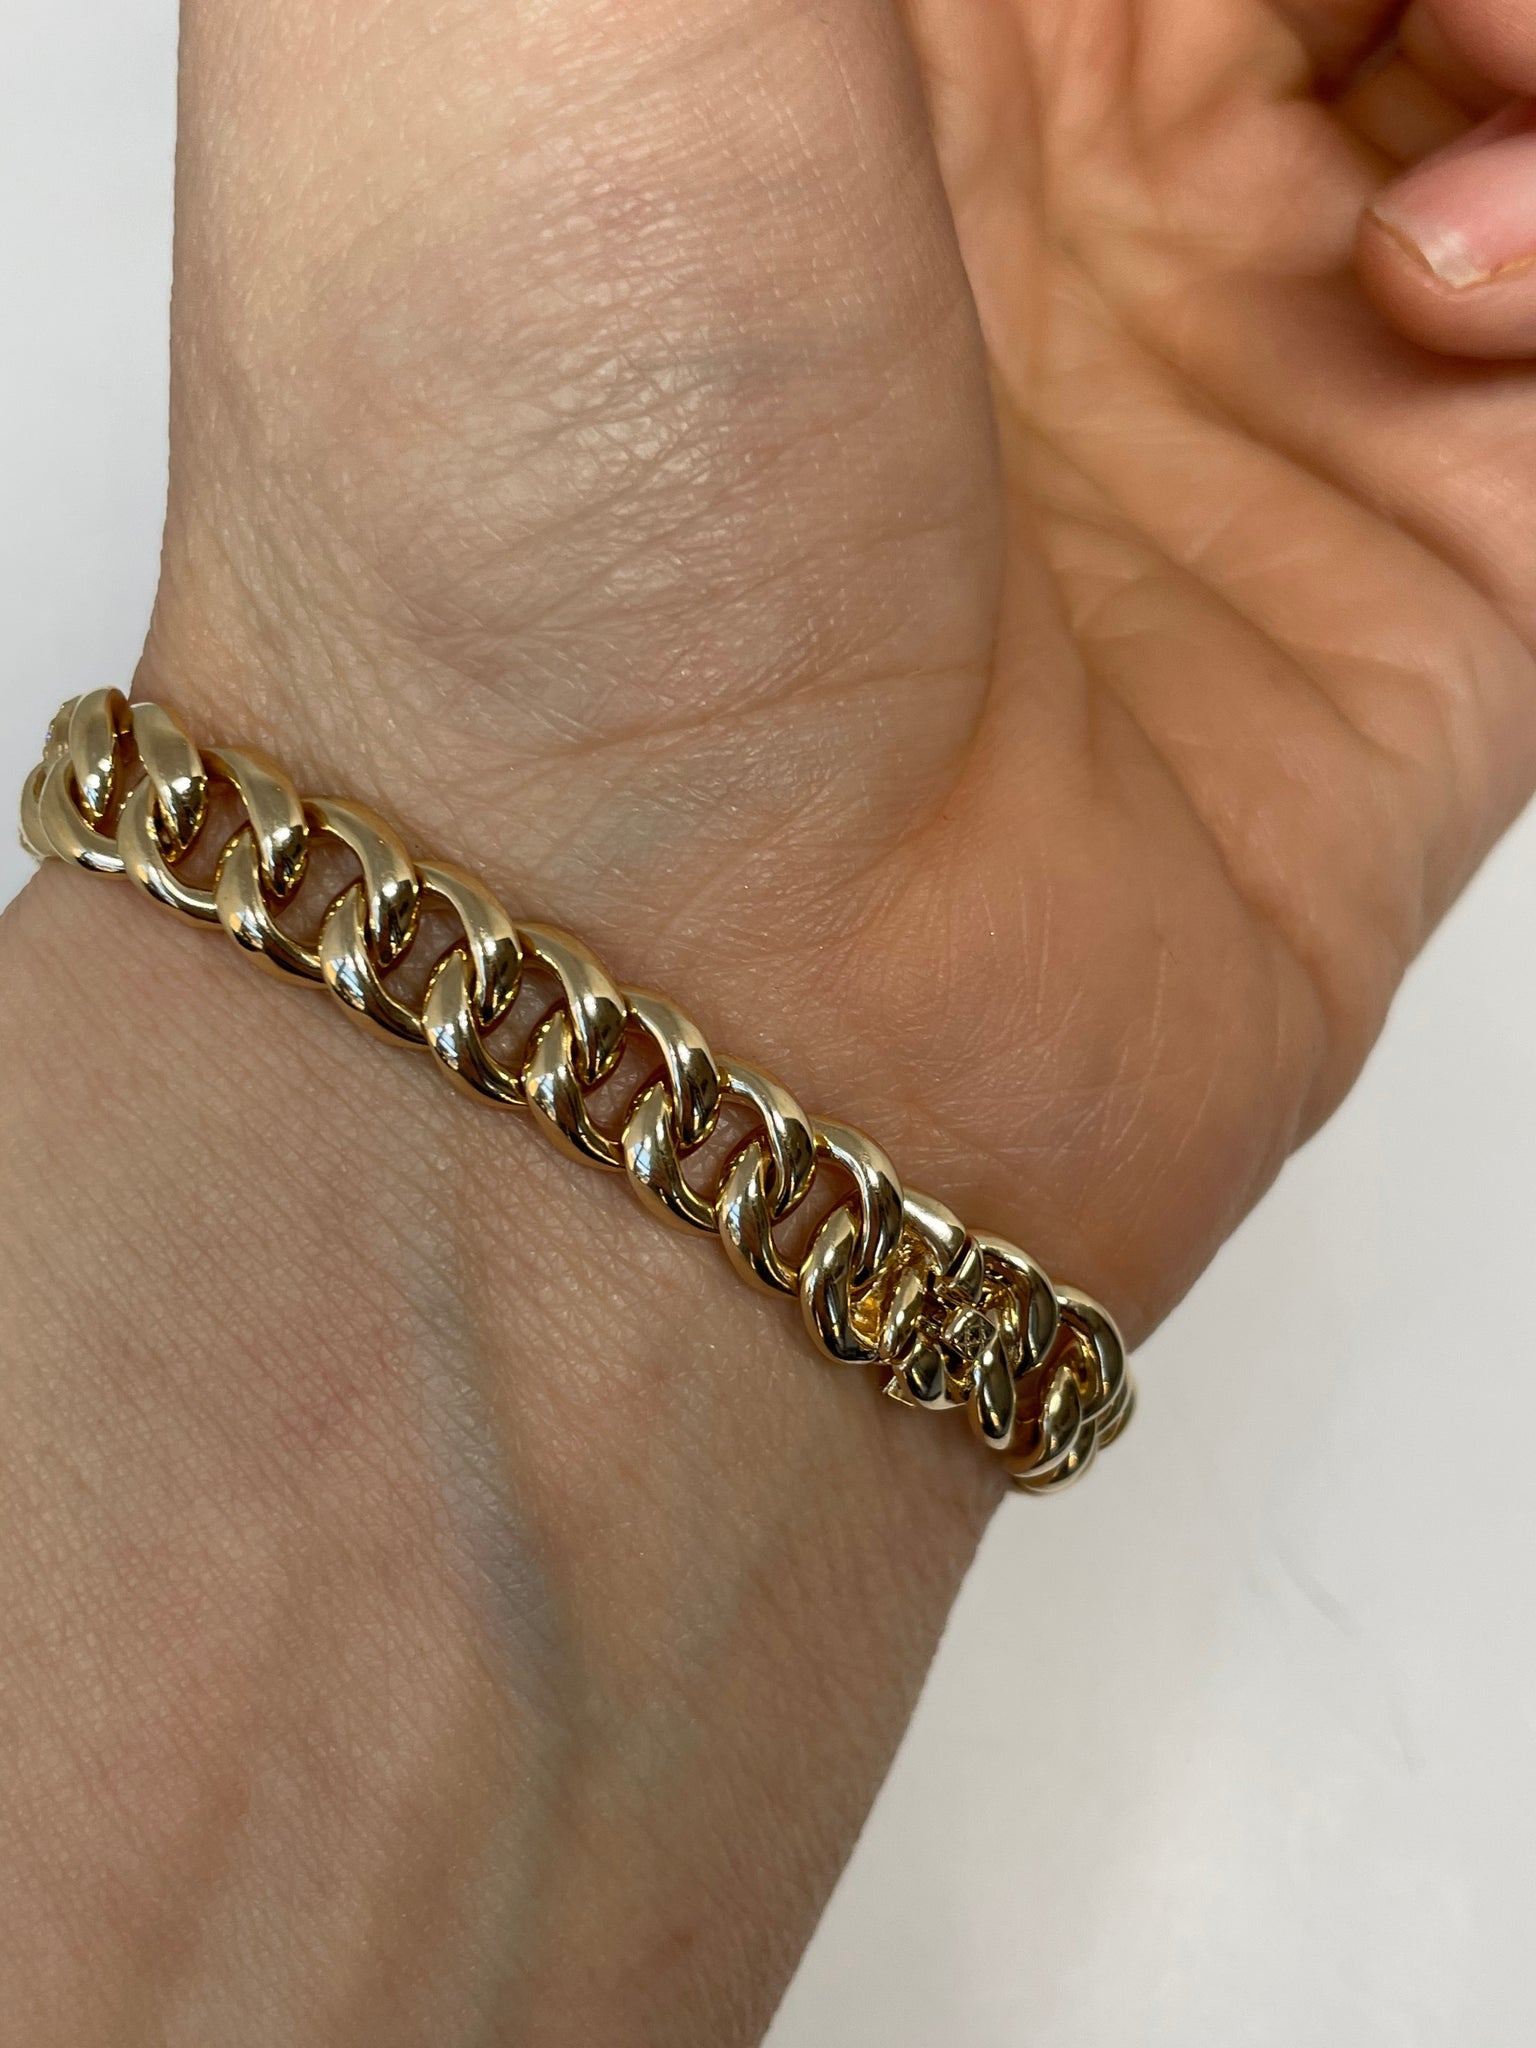 White Gold Cuban Link Bracelet